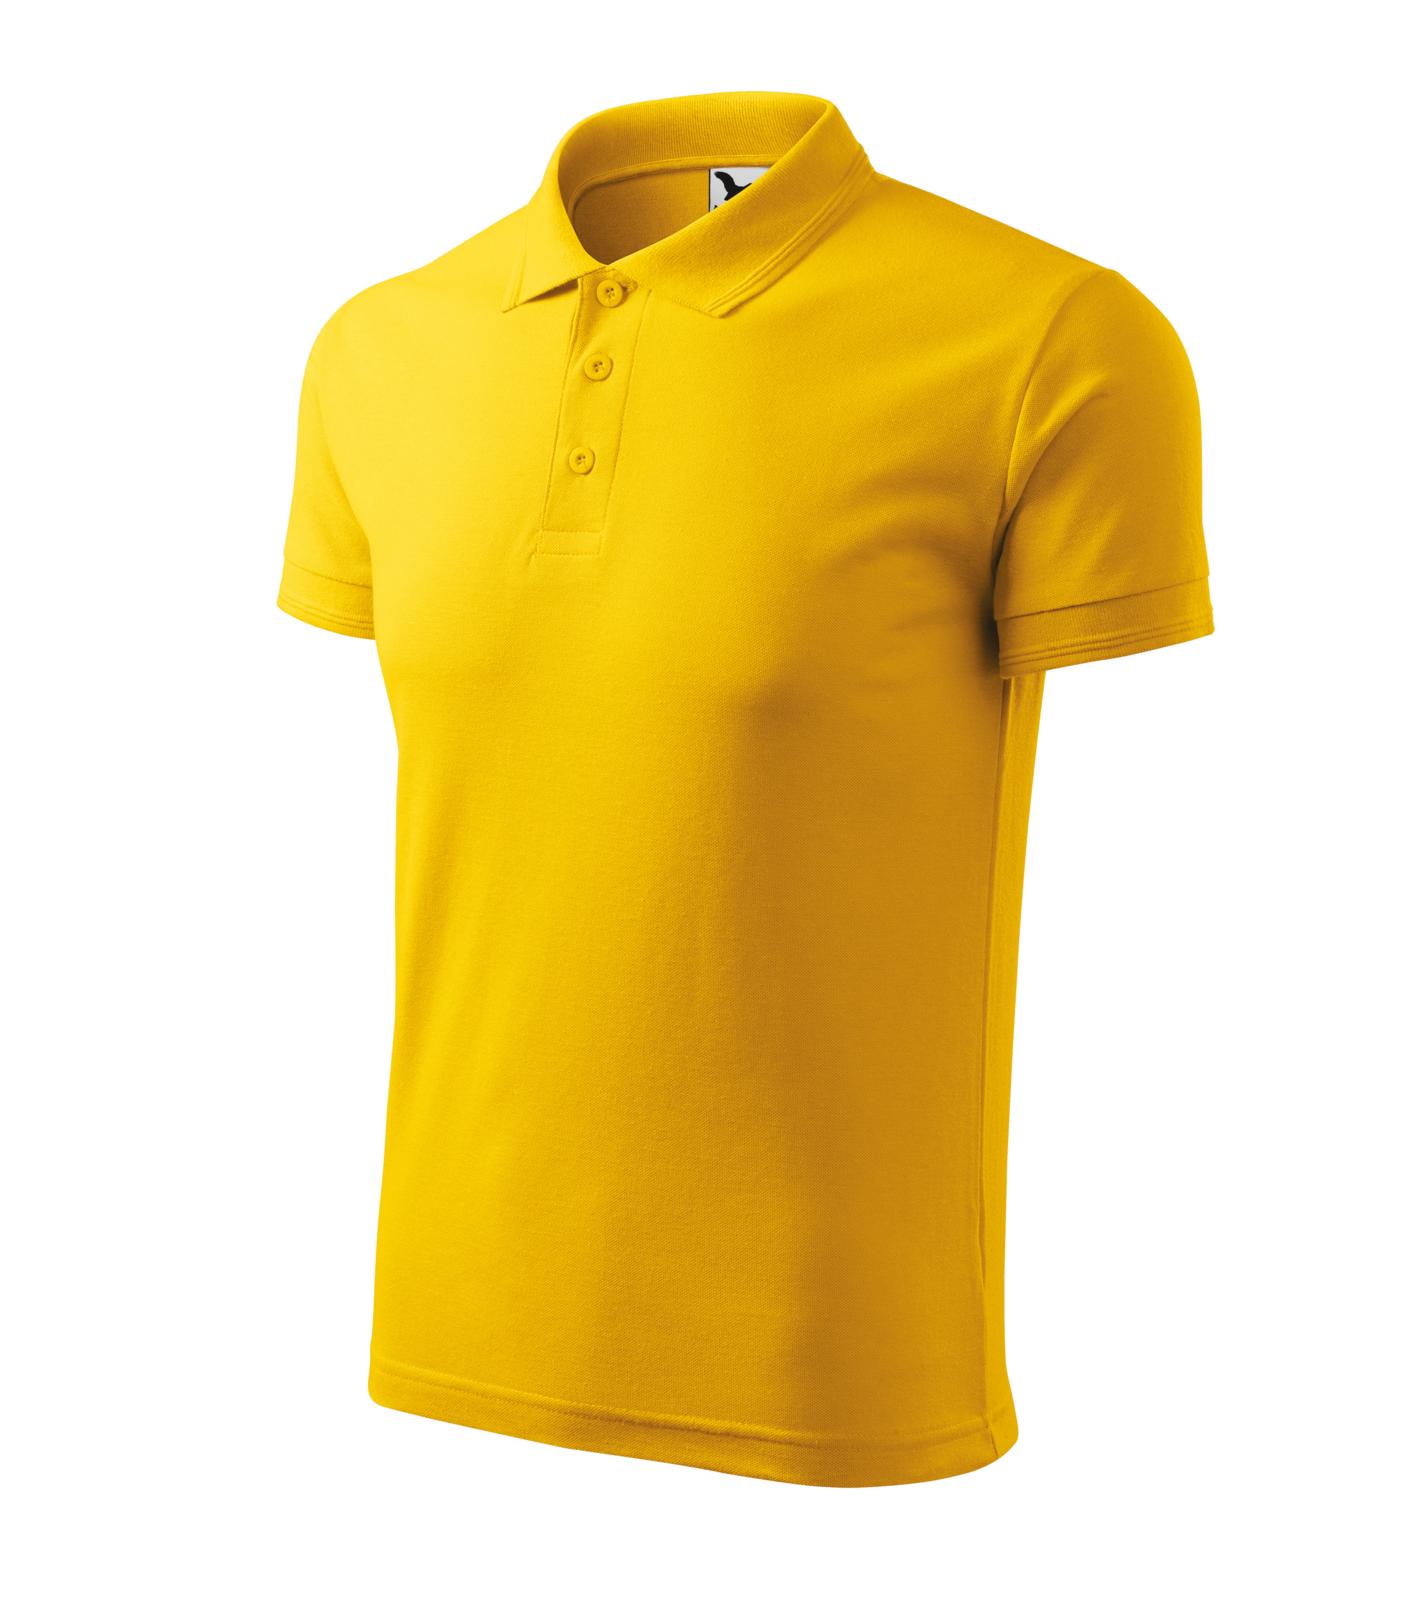 Pique Polo Polokošile pánská Barva: žlutá, Velikost: 3XL